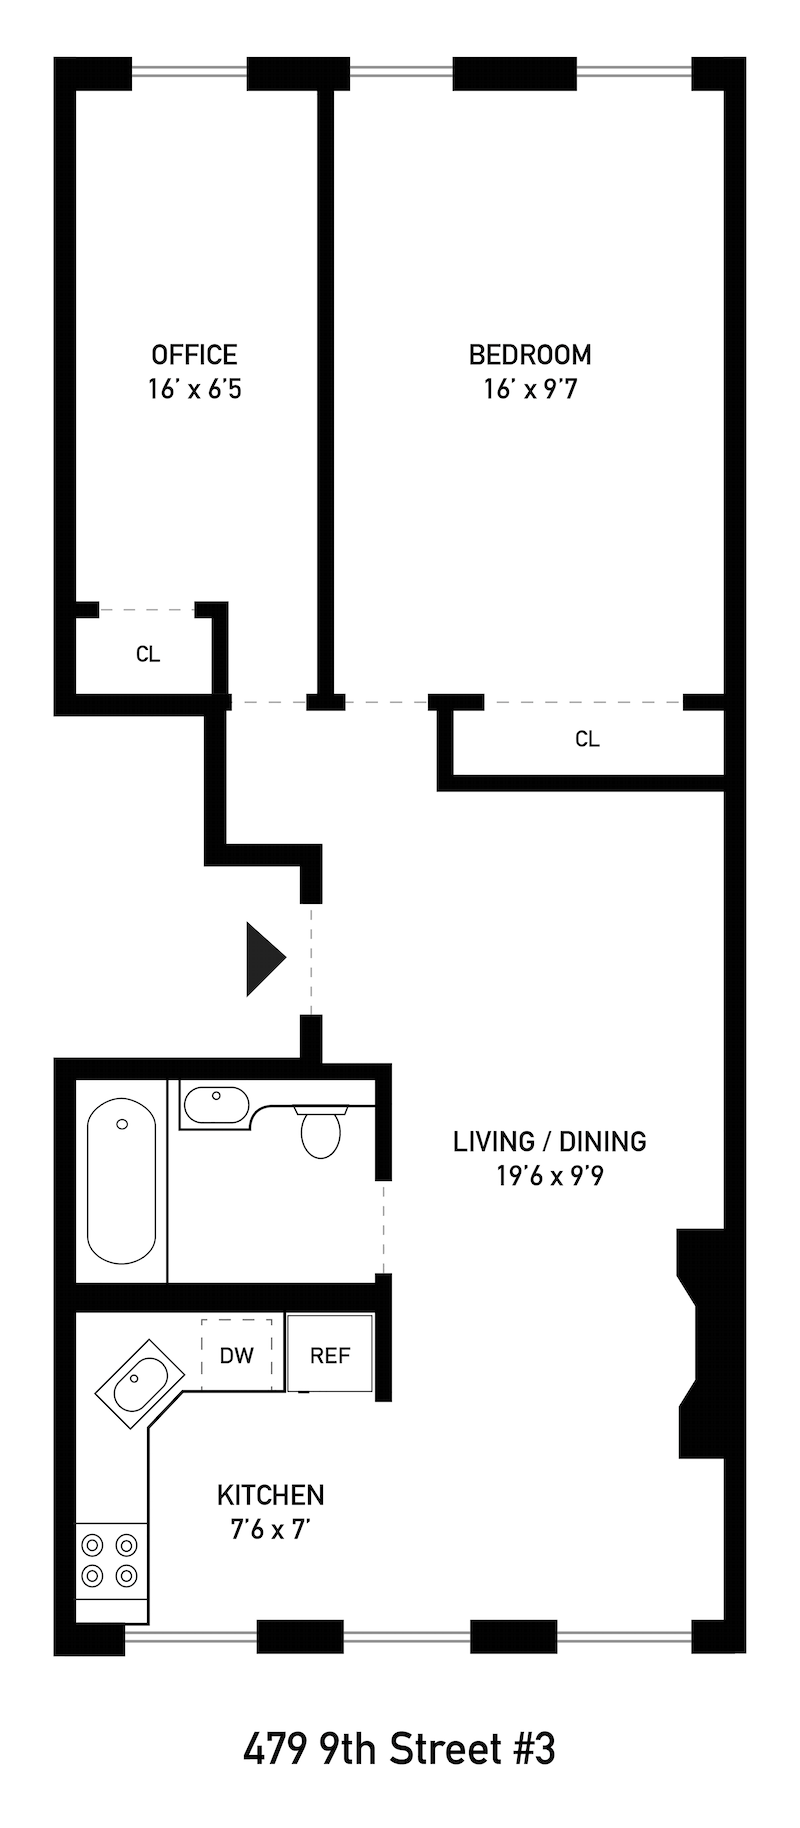 Floorplan for 479 9th Street, 3